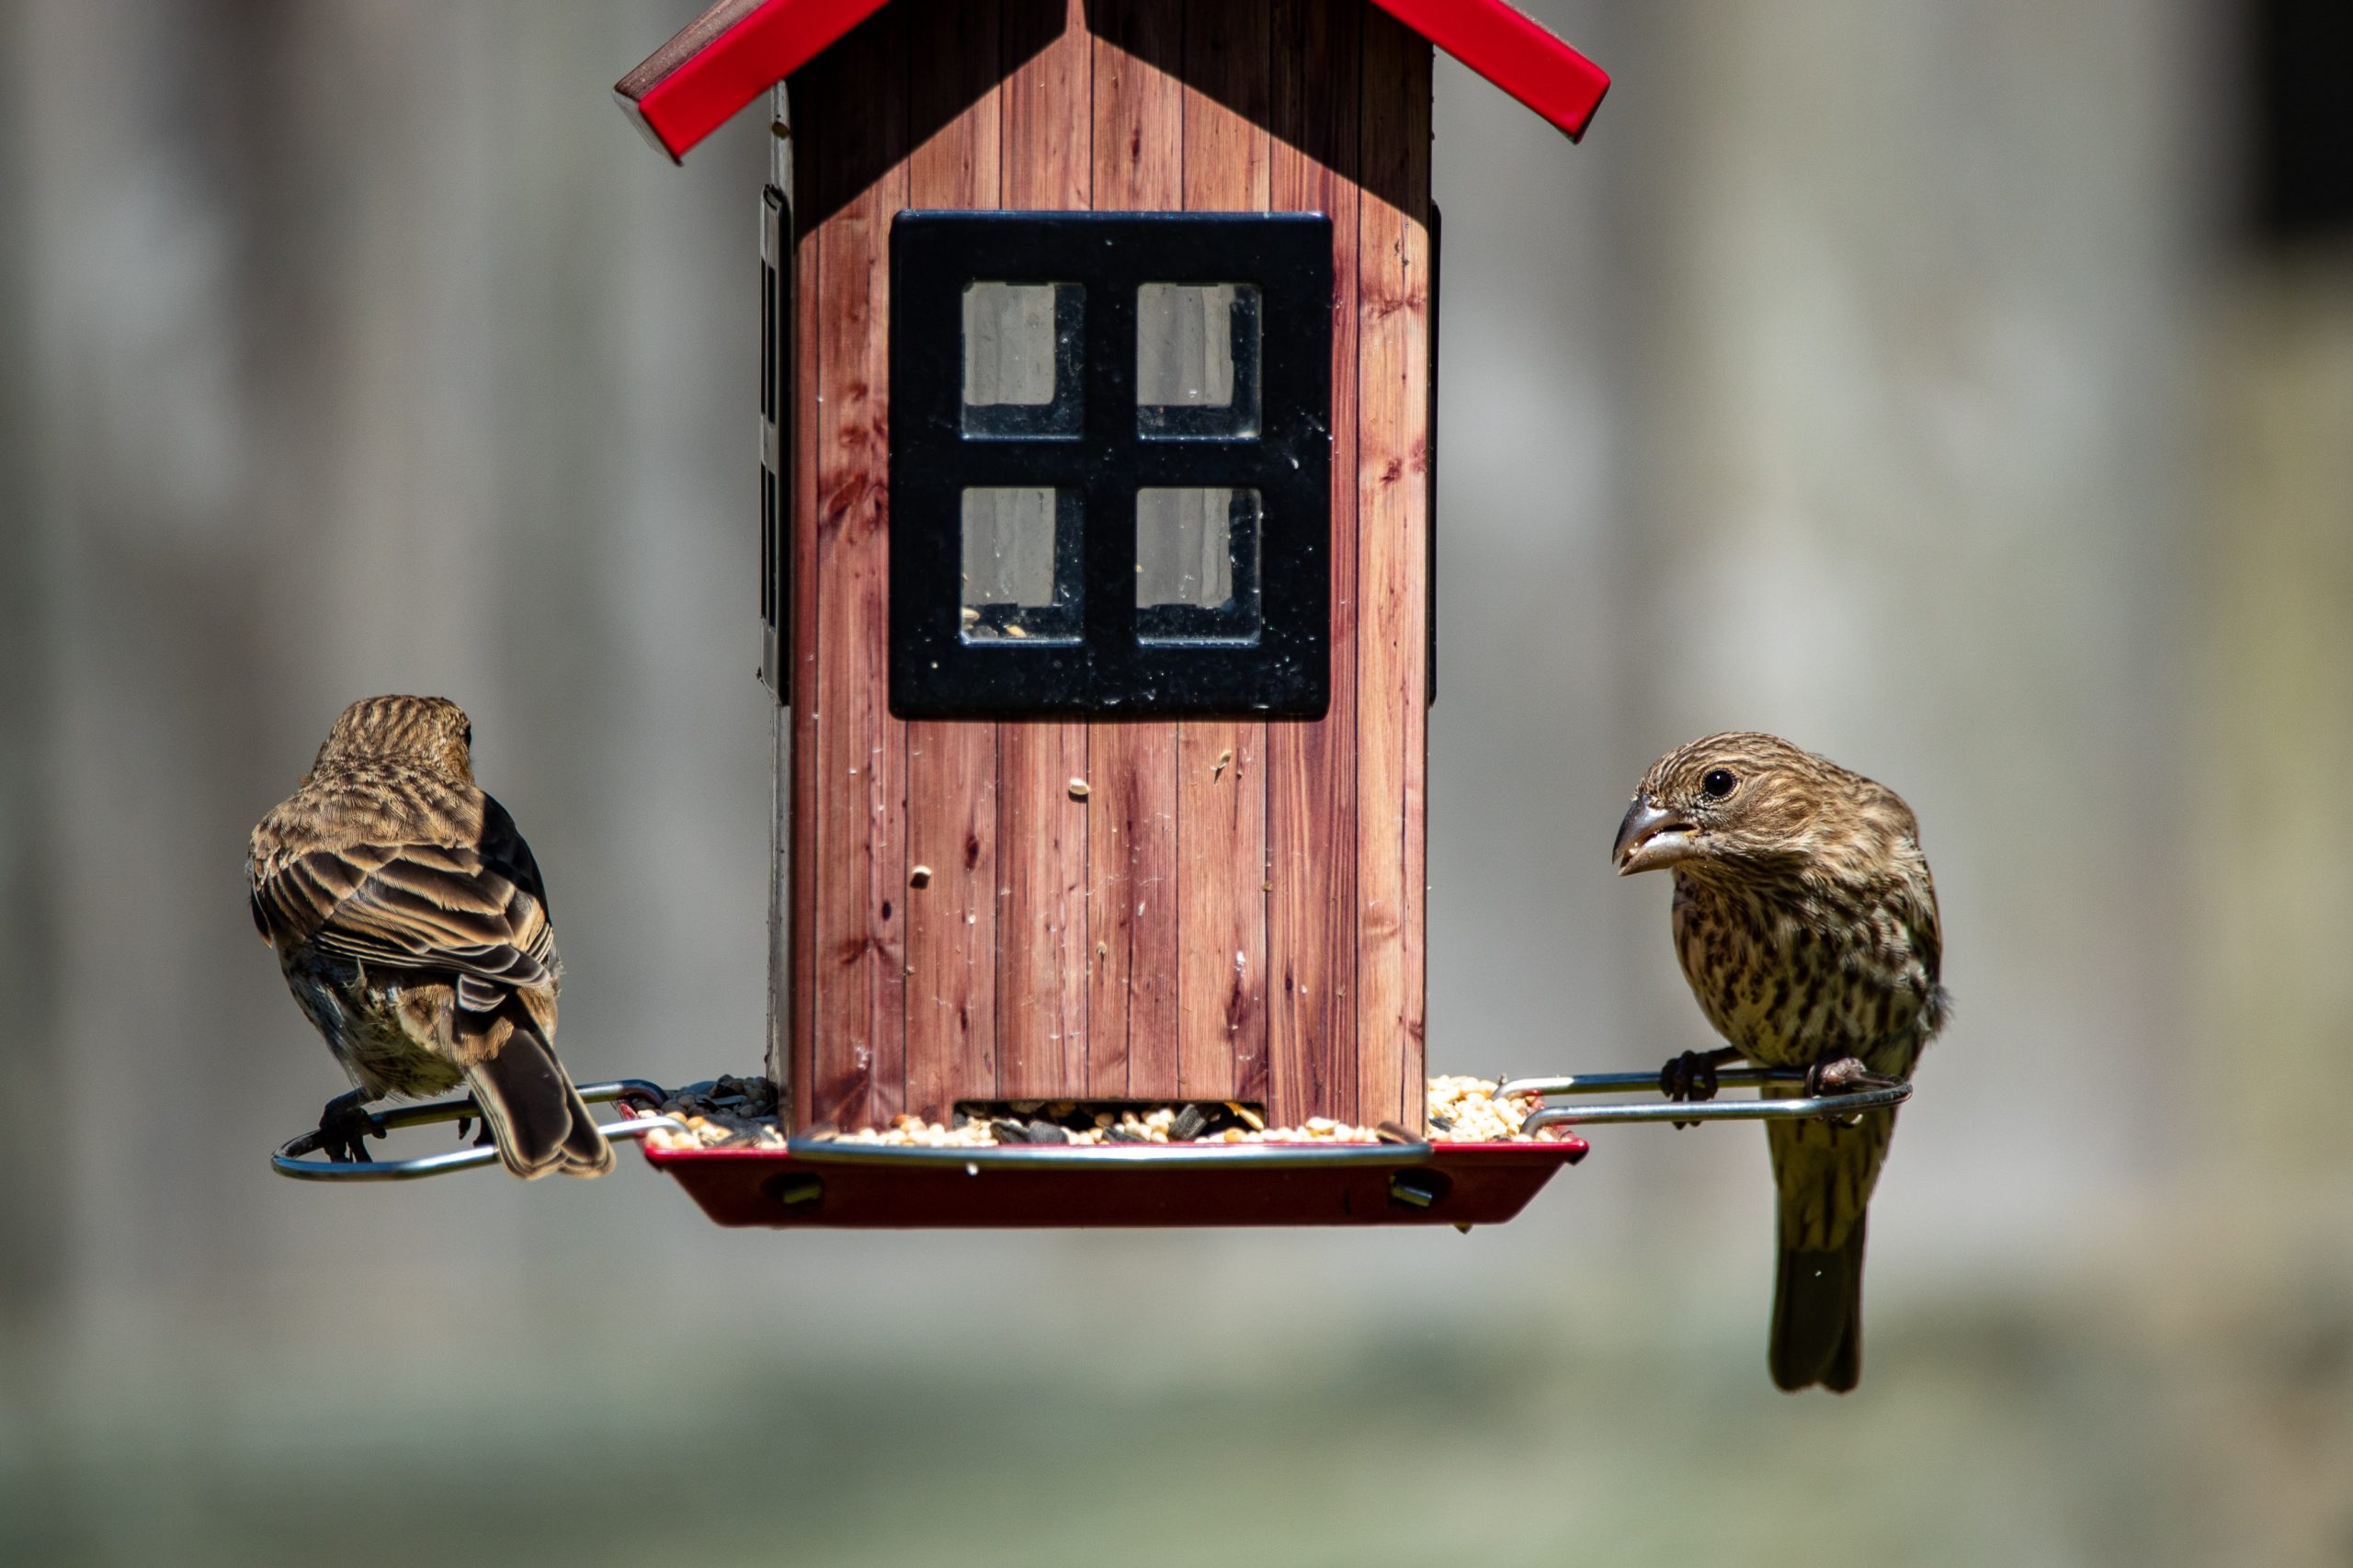 How do birds find bird feeders?